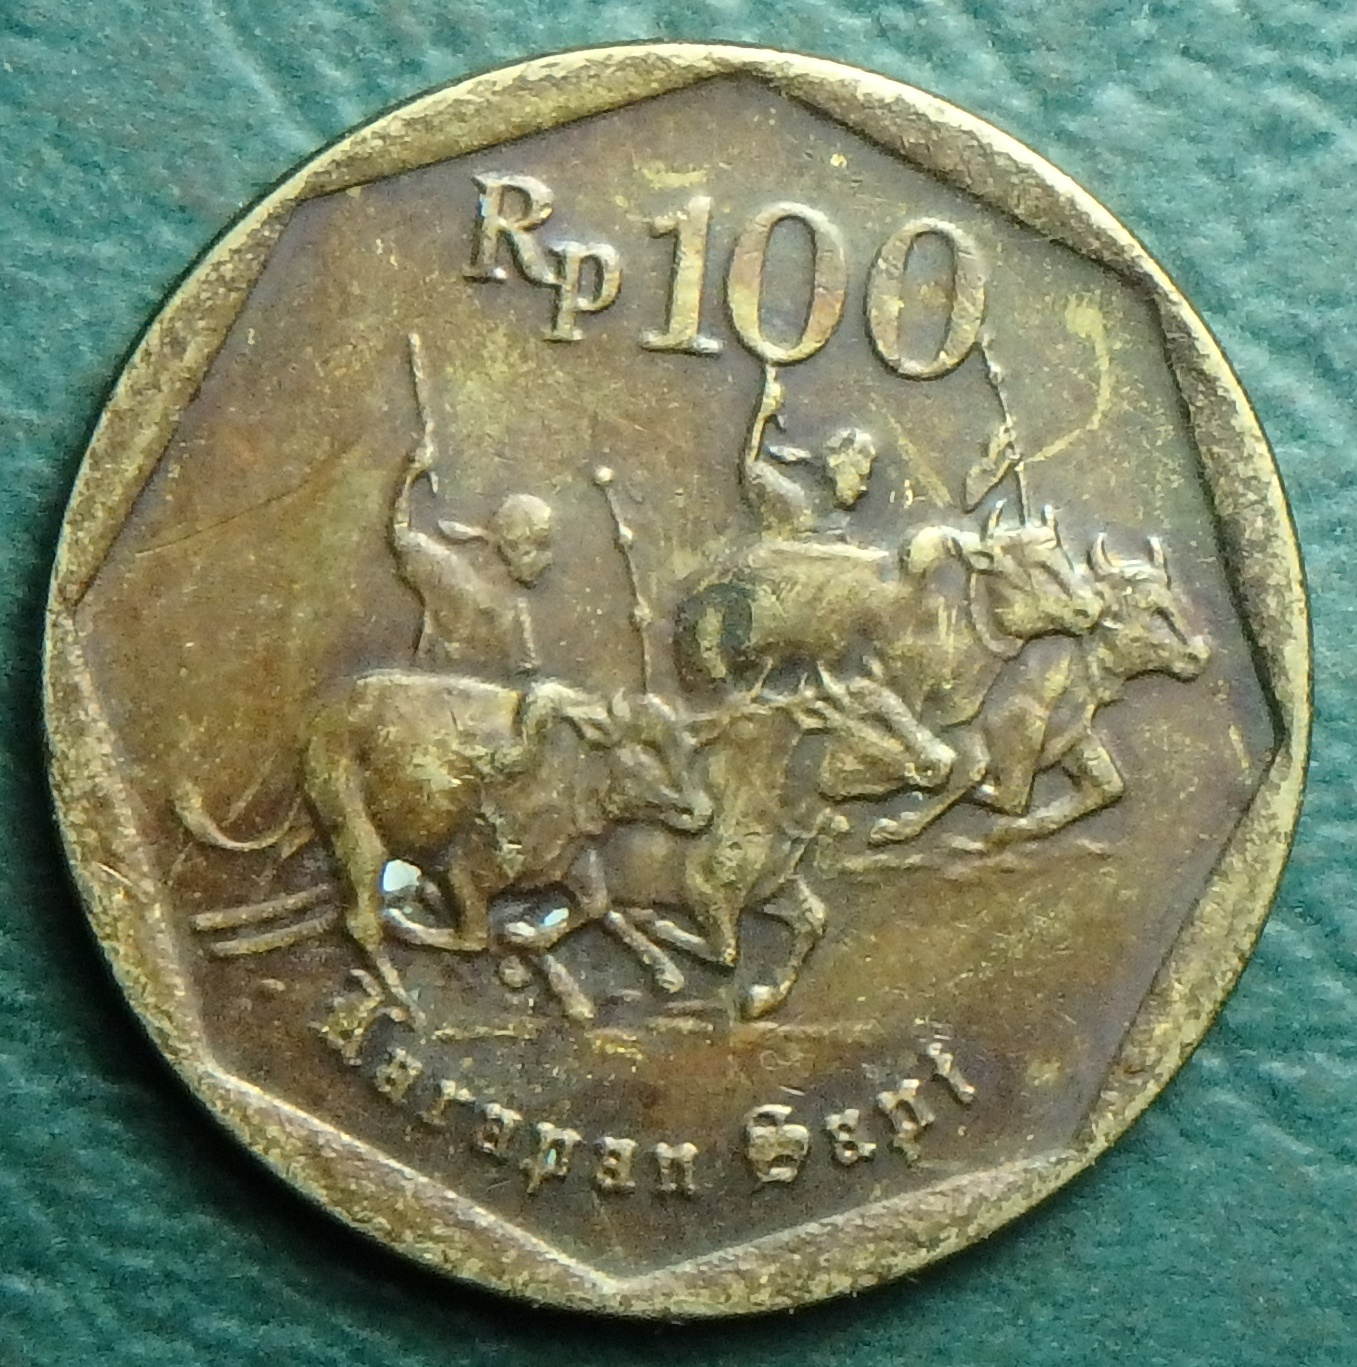 1995 ID 100 r rev (2).JPG